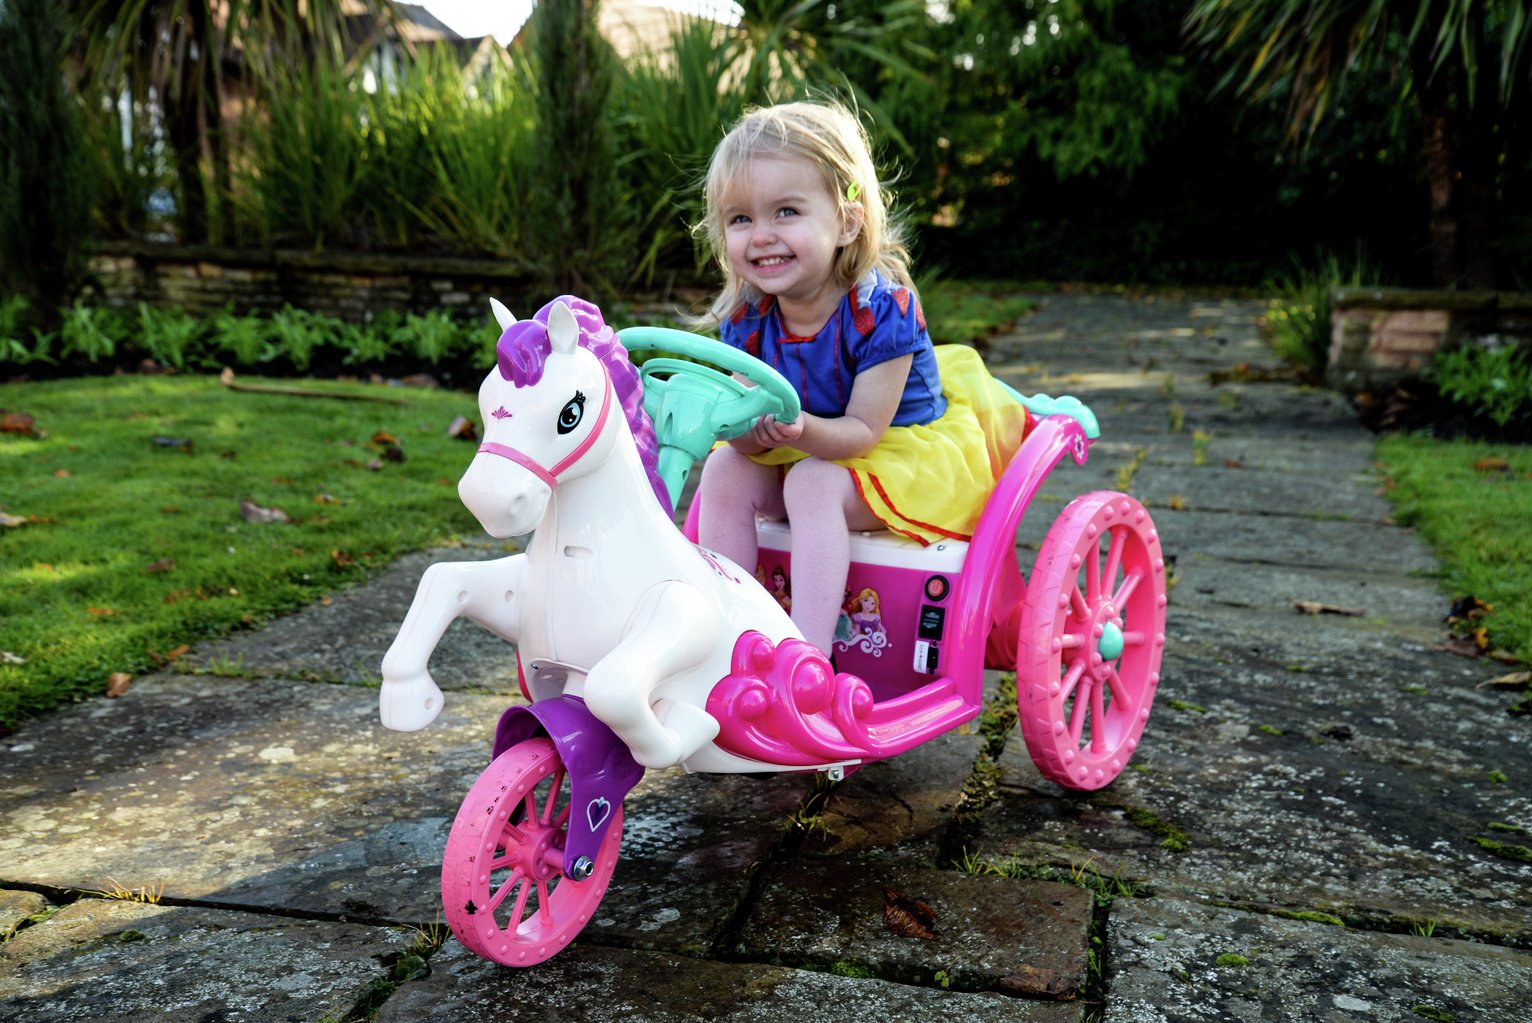 Disney Princess Carriage 6V Powered Ride On Review